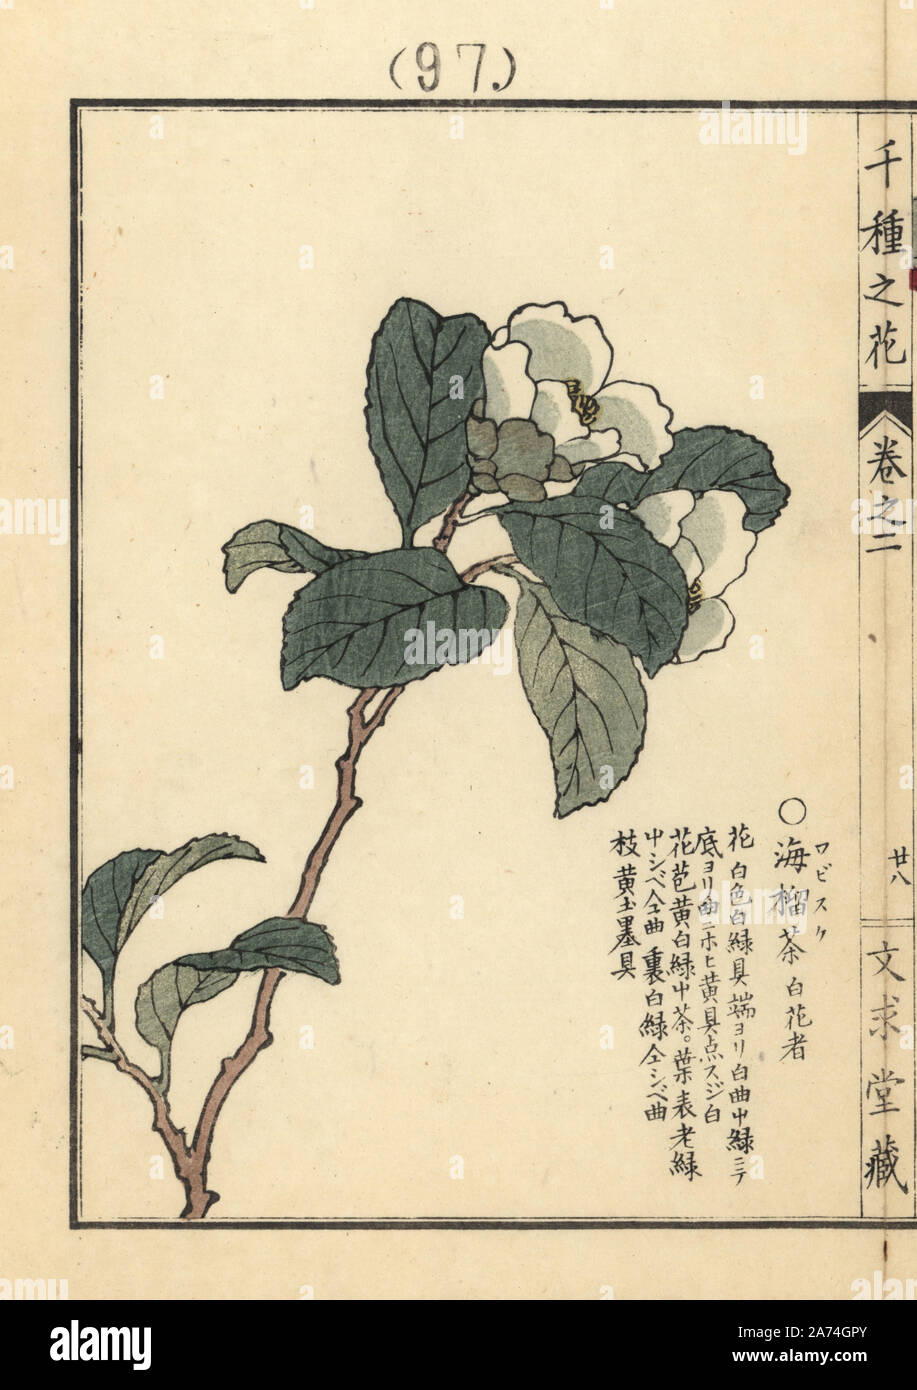 Wabisuke tsubaki or uraku camellia, Camellia uraku Kitam. Handcoloured woodblock print by Kono Bairei from Senshu no Hana (One Thousand Varieties of Flowers), Bunkyudo, Kyoto, 1900. Stock Photo